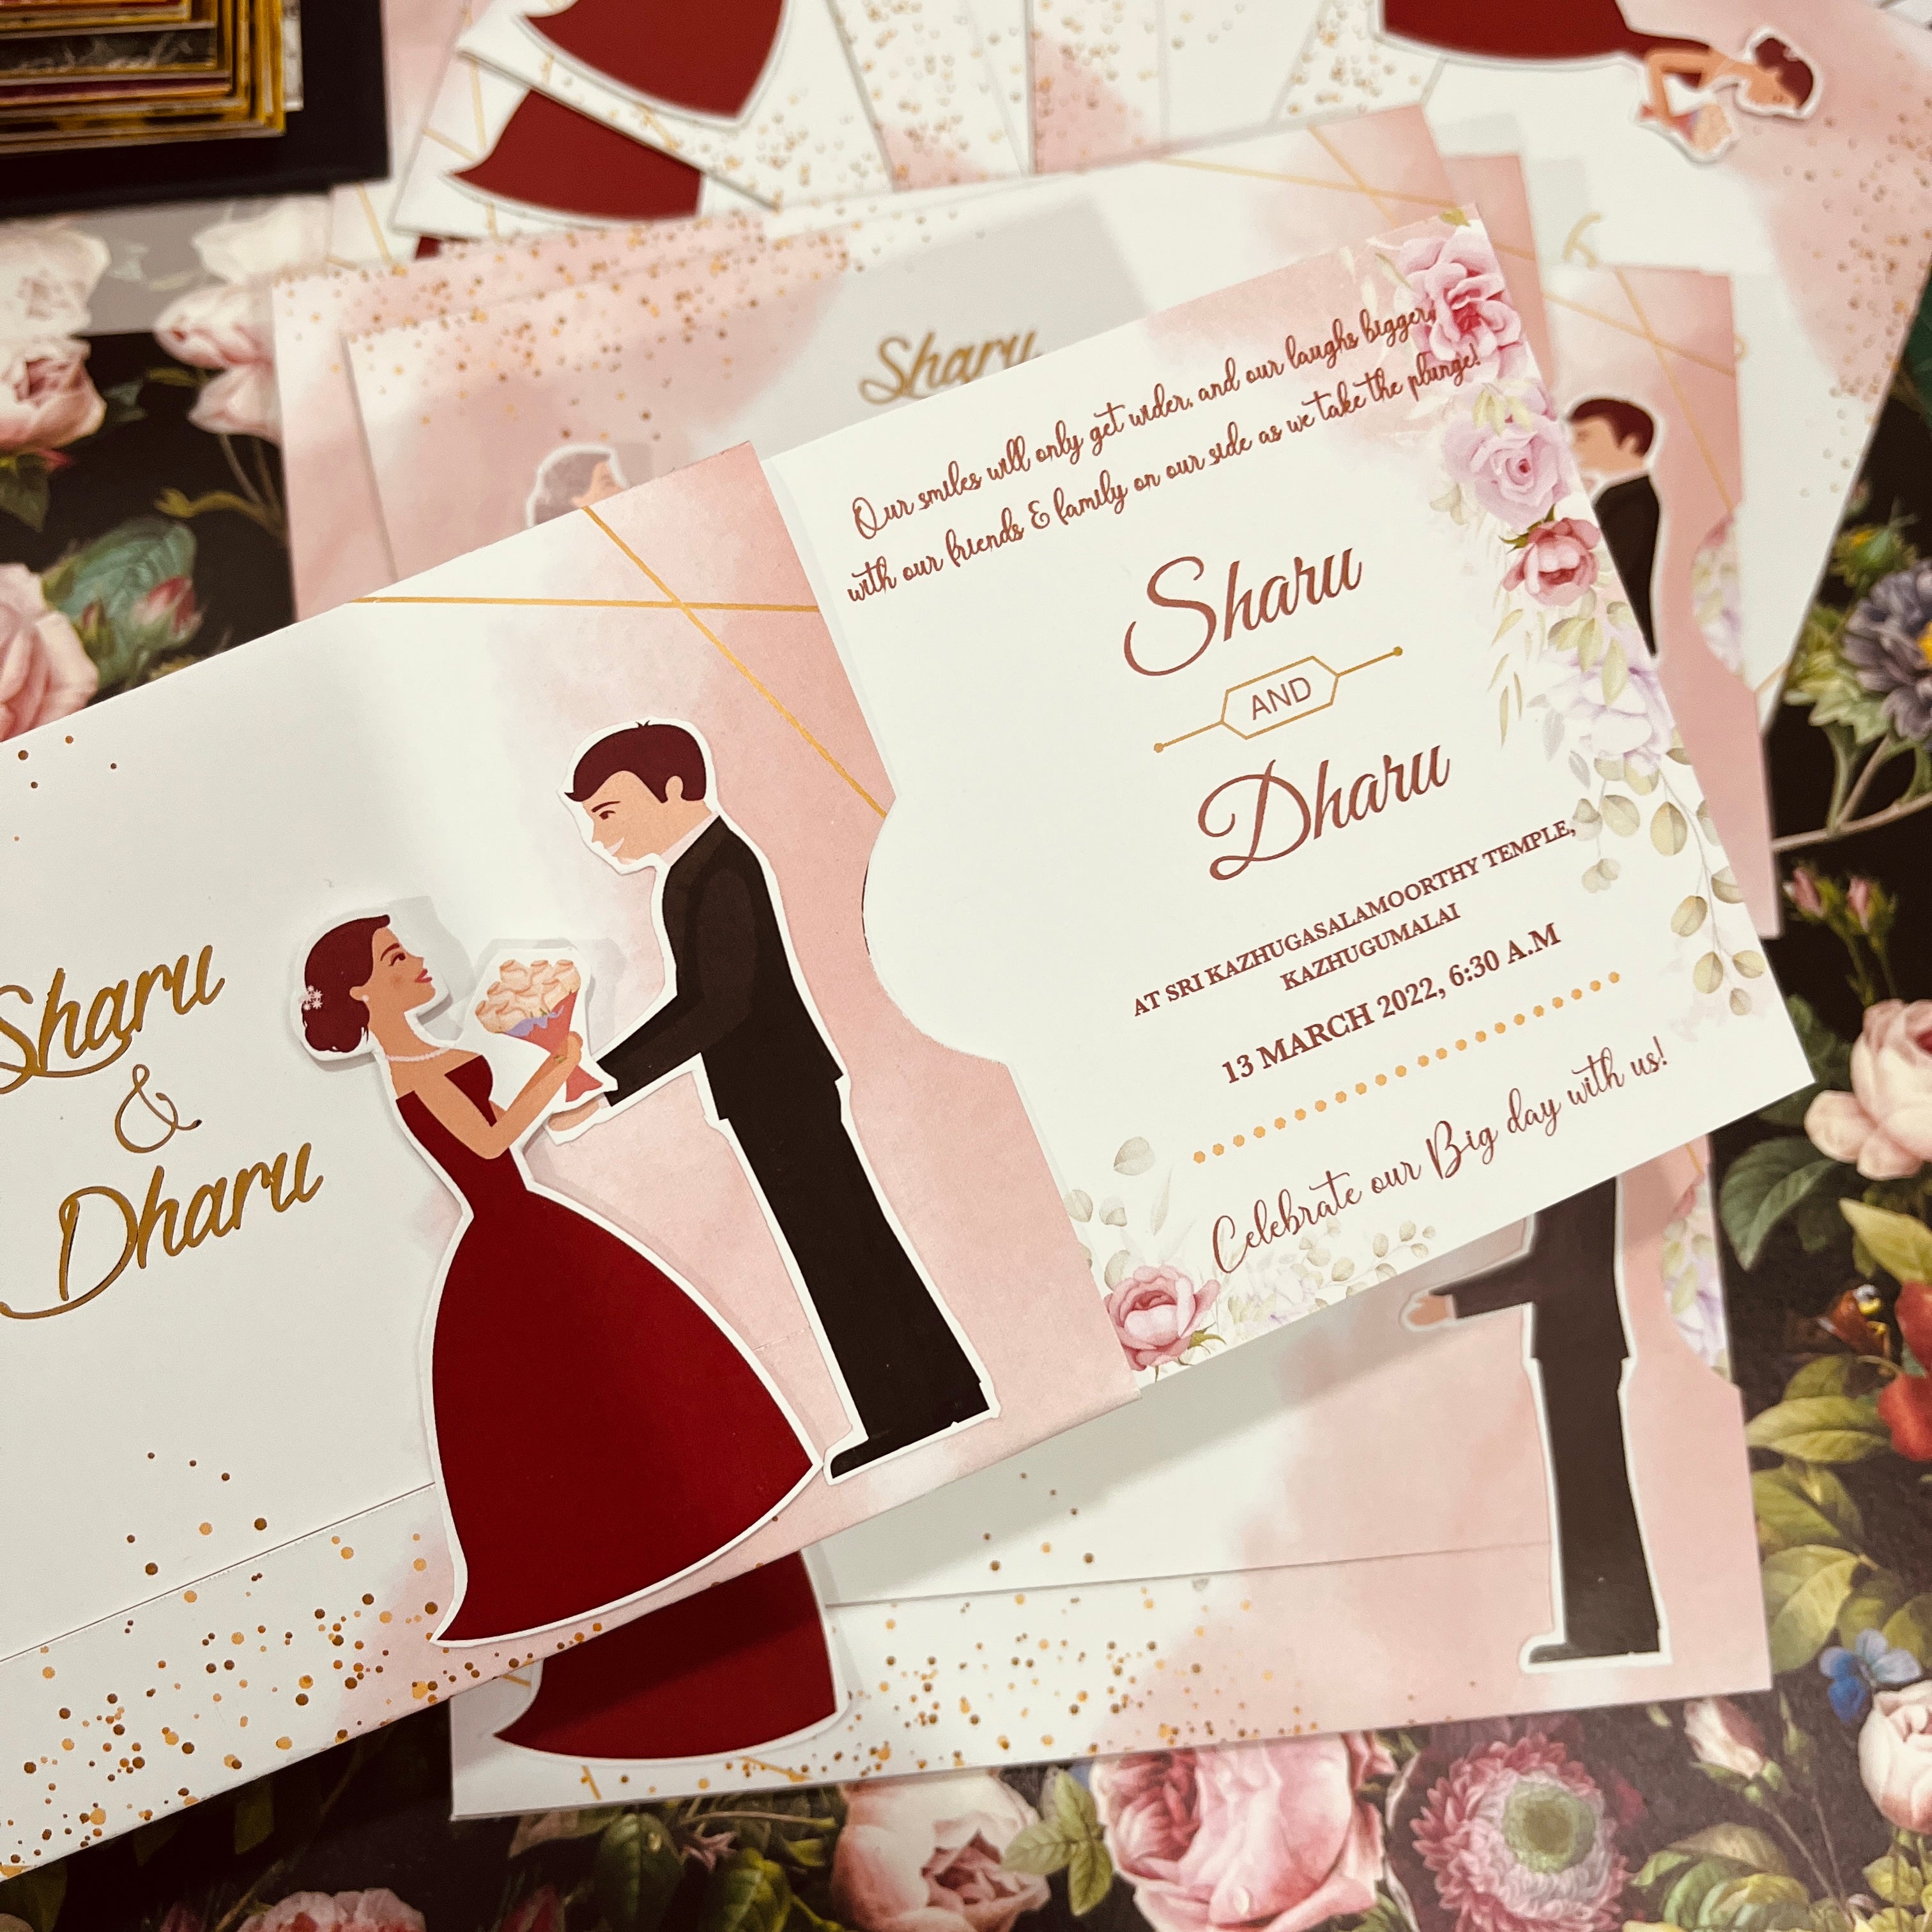 Suit-Gown Wedding Invitation / Sliding wedding cards / Sliding invites /  Customised Invitation, Sliding cards (25 pcs)